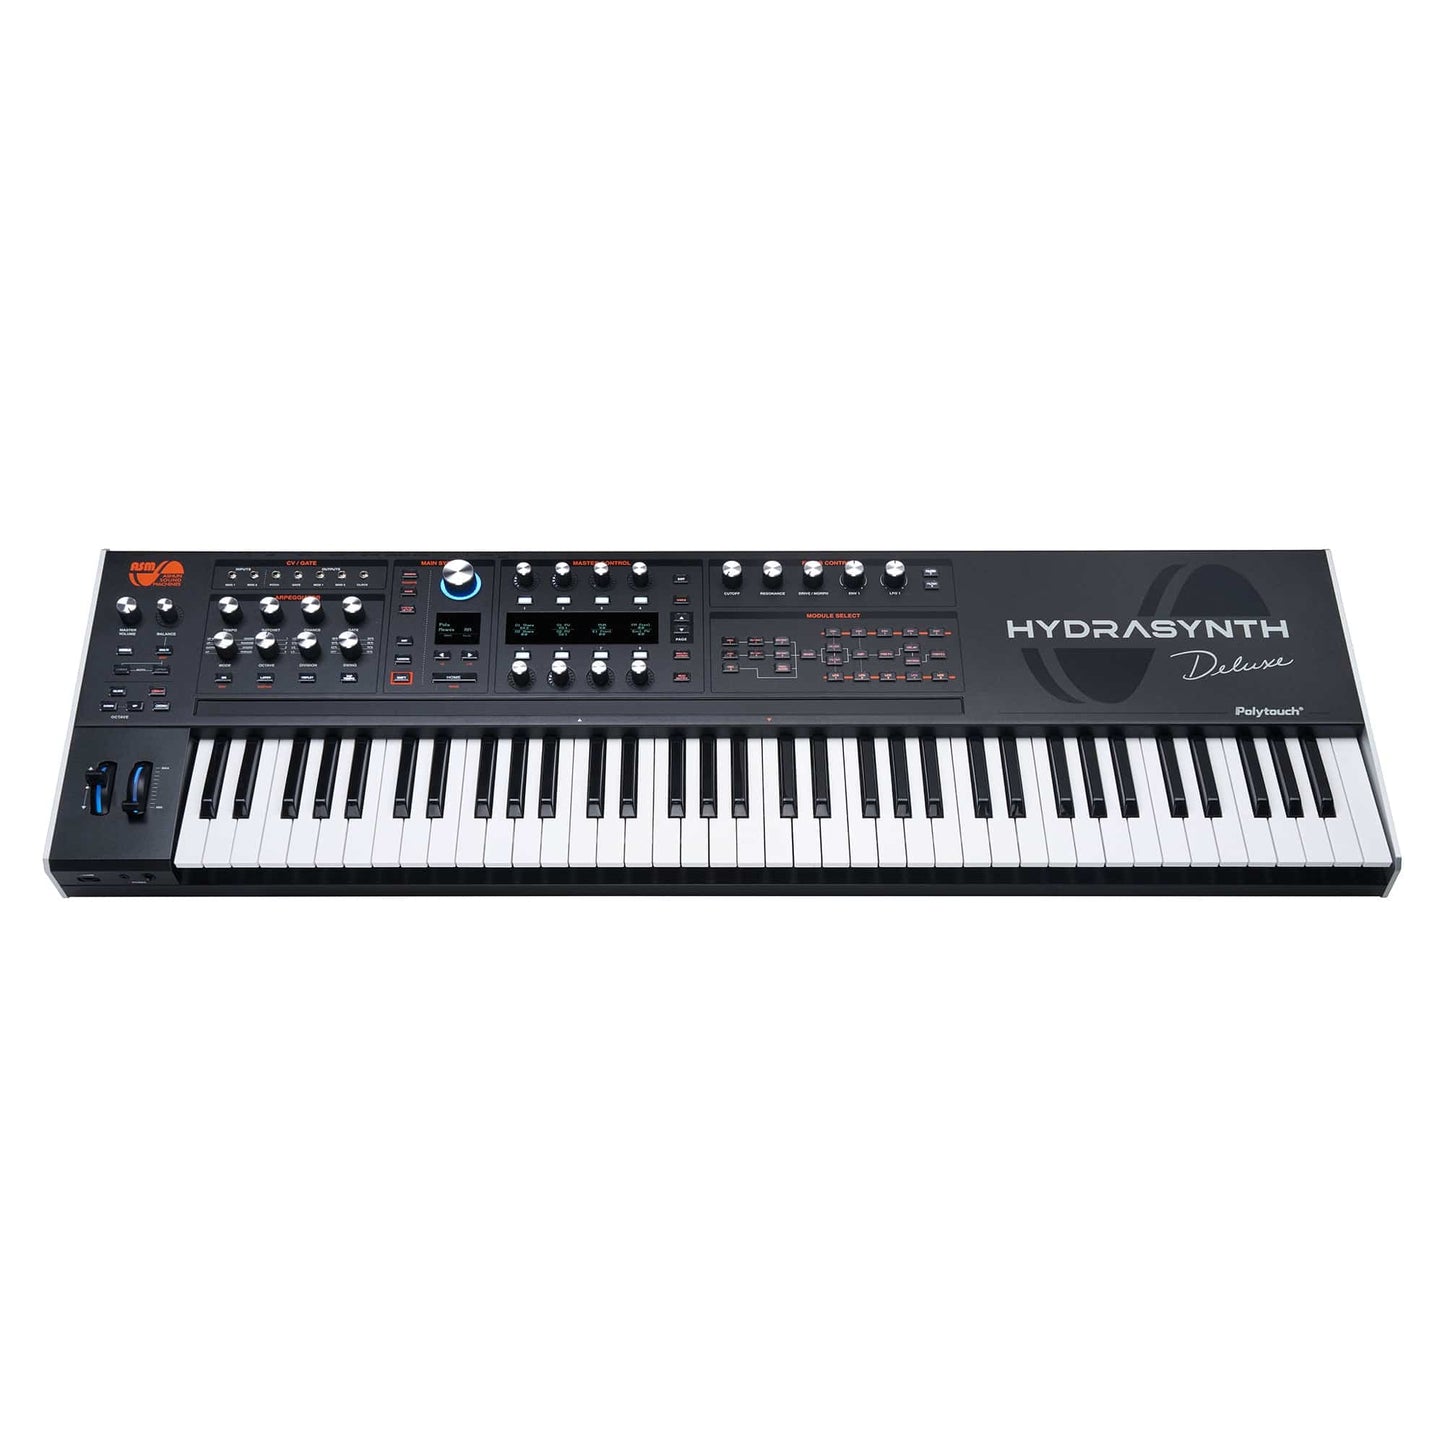 ASM Hydrasynth Deluxe 73-Key Digital Polyphonic Synthesizer Keyboards and Synths / Synths / Digital Synths